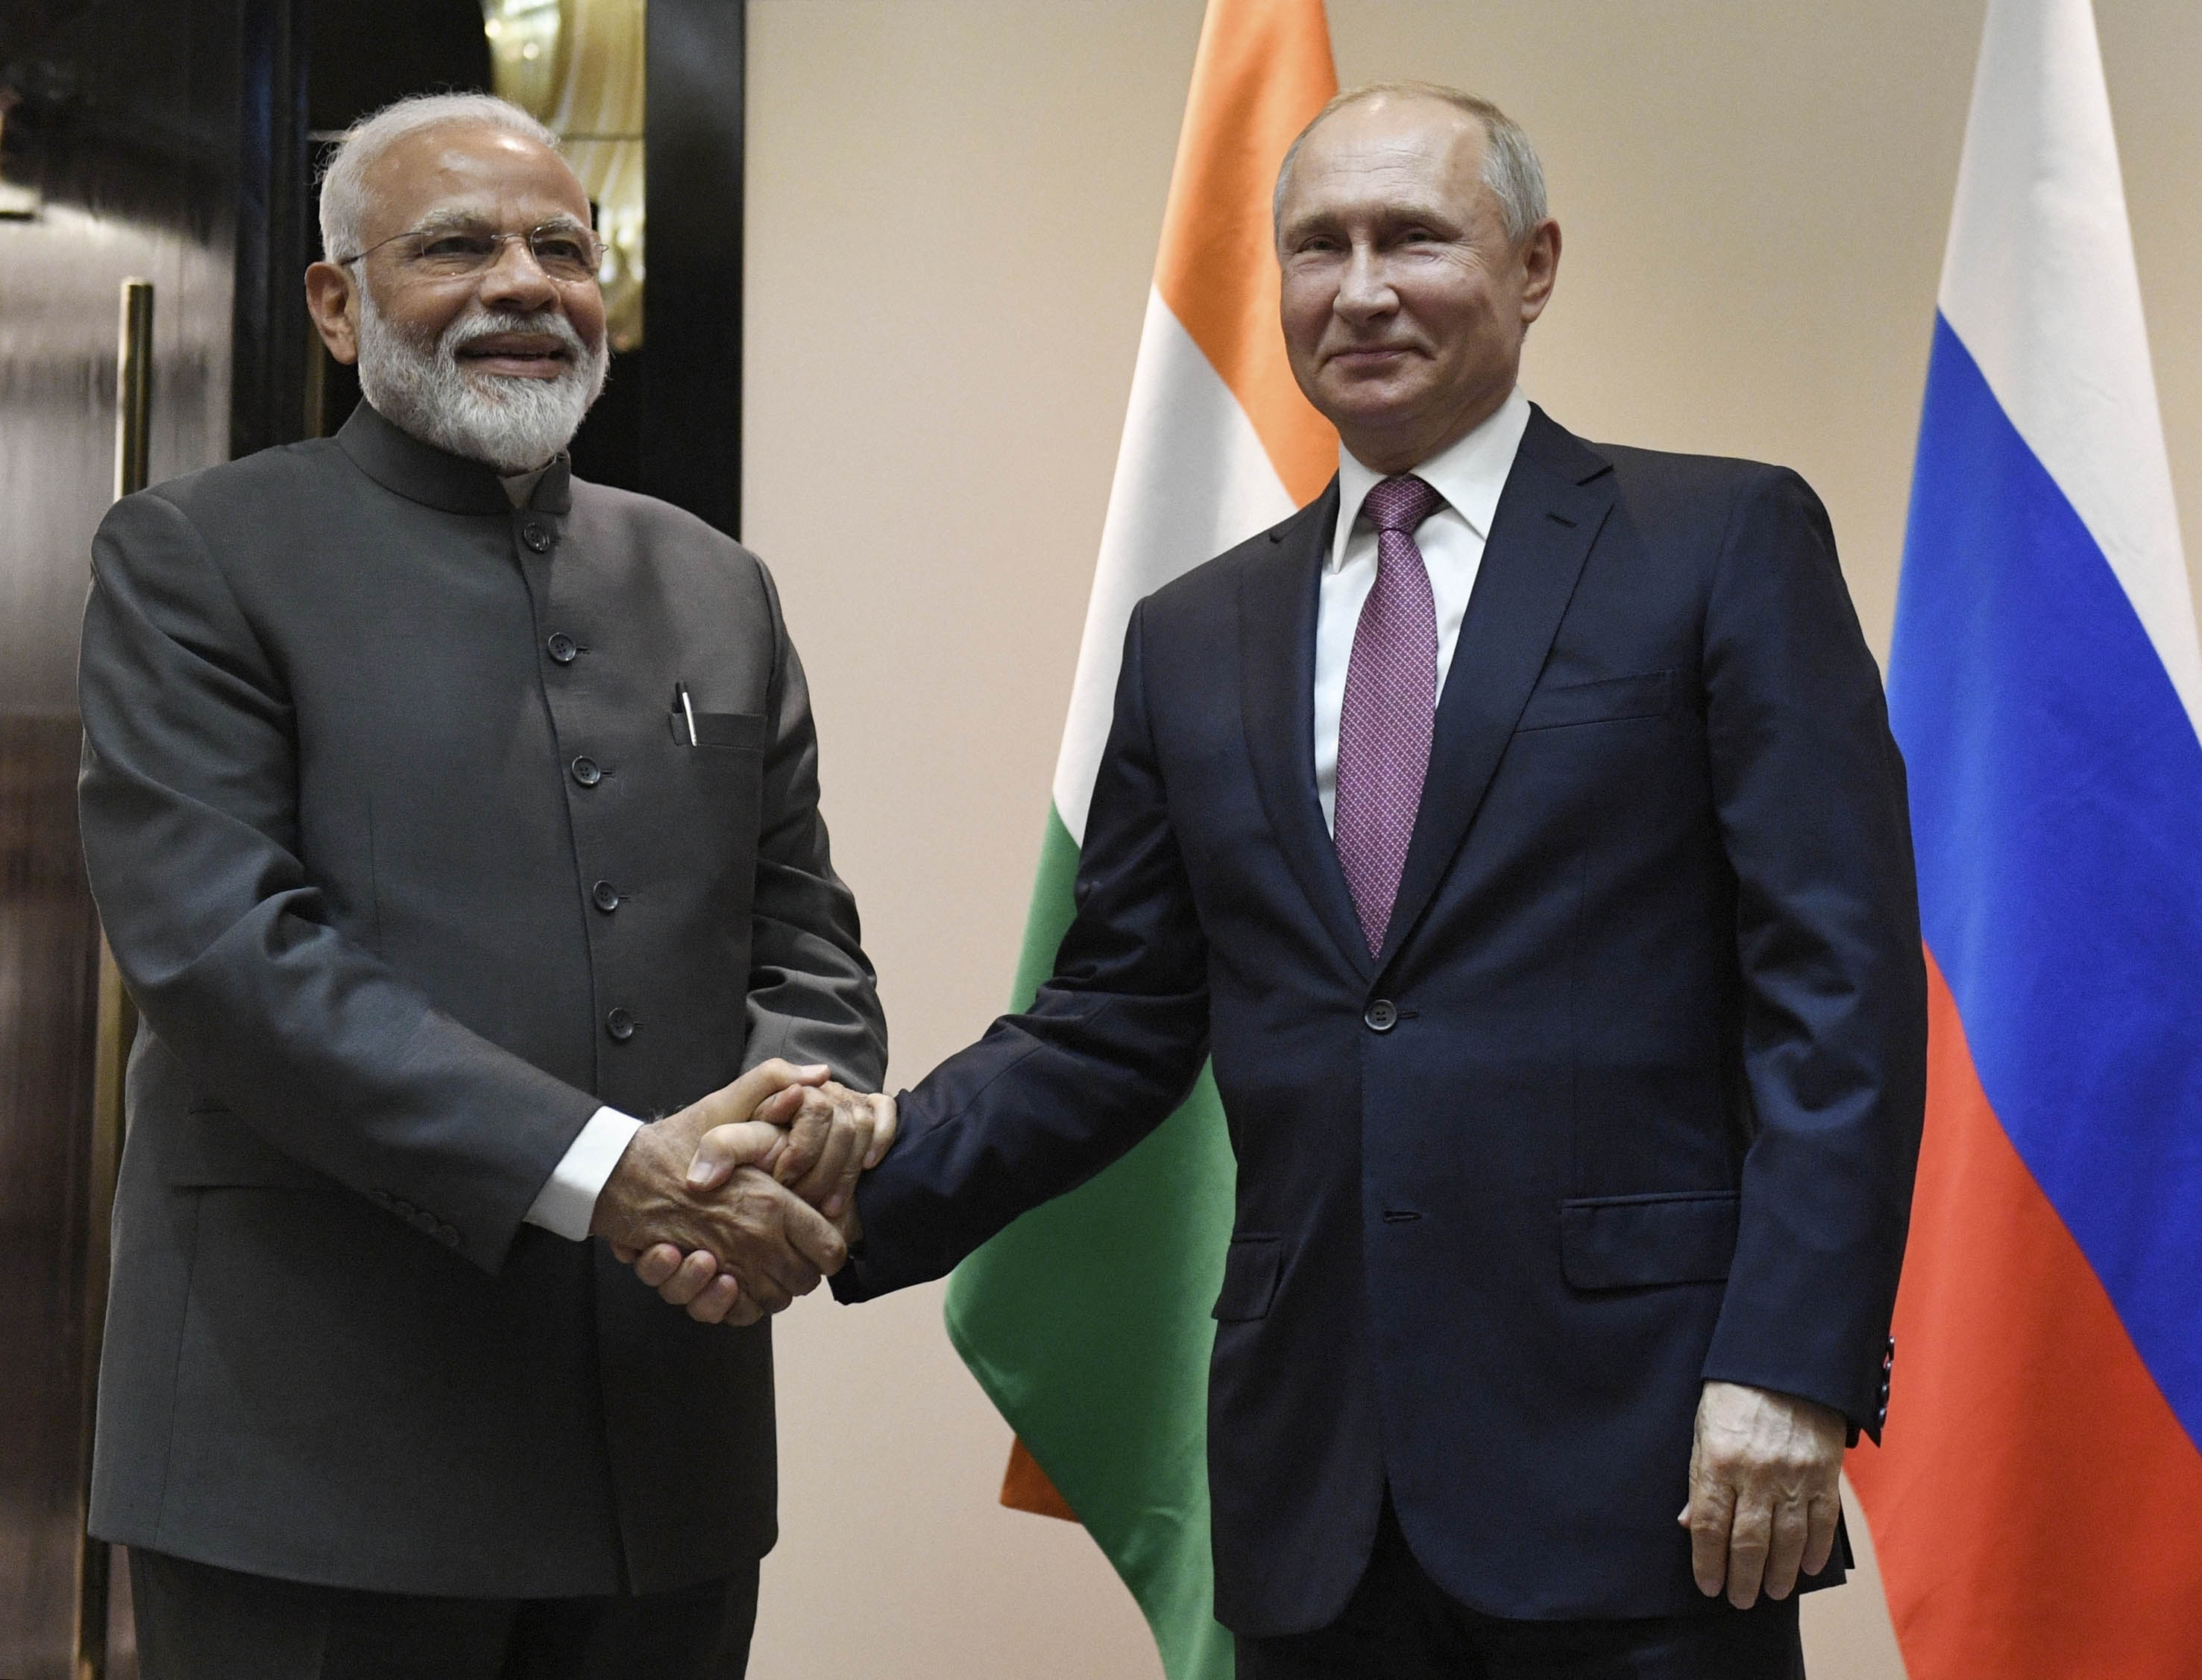 Narendra Modi with Vladimir Putin, The Federal, English news website